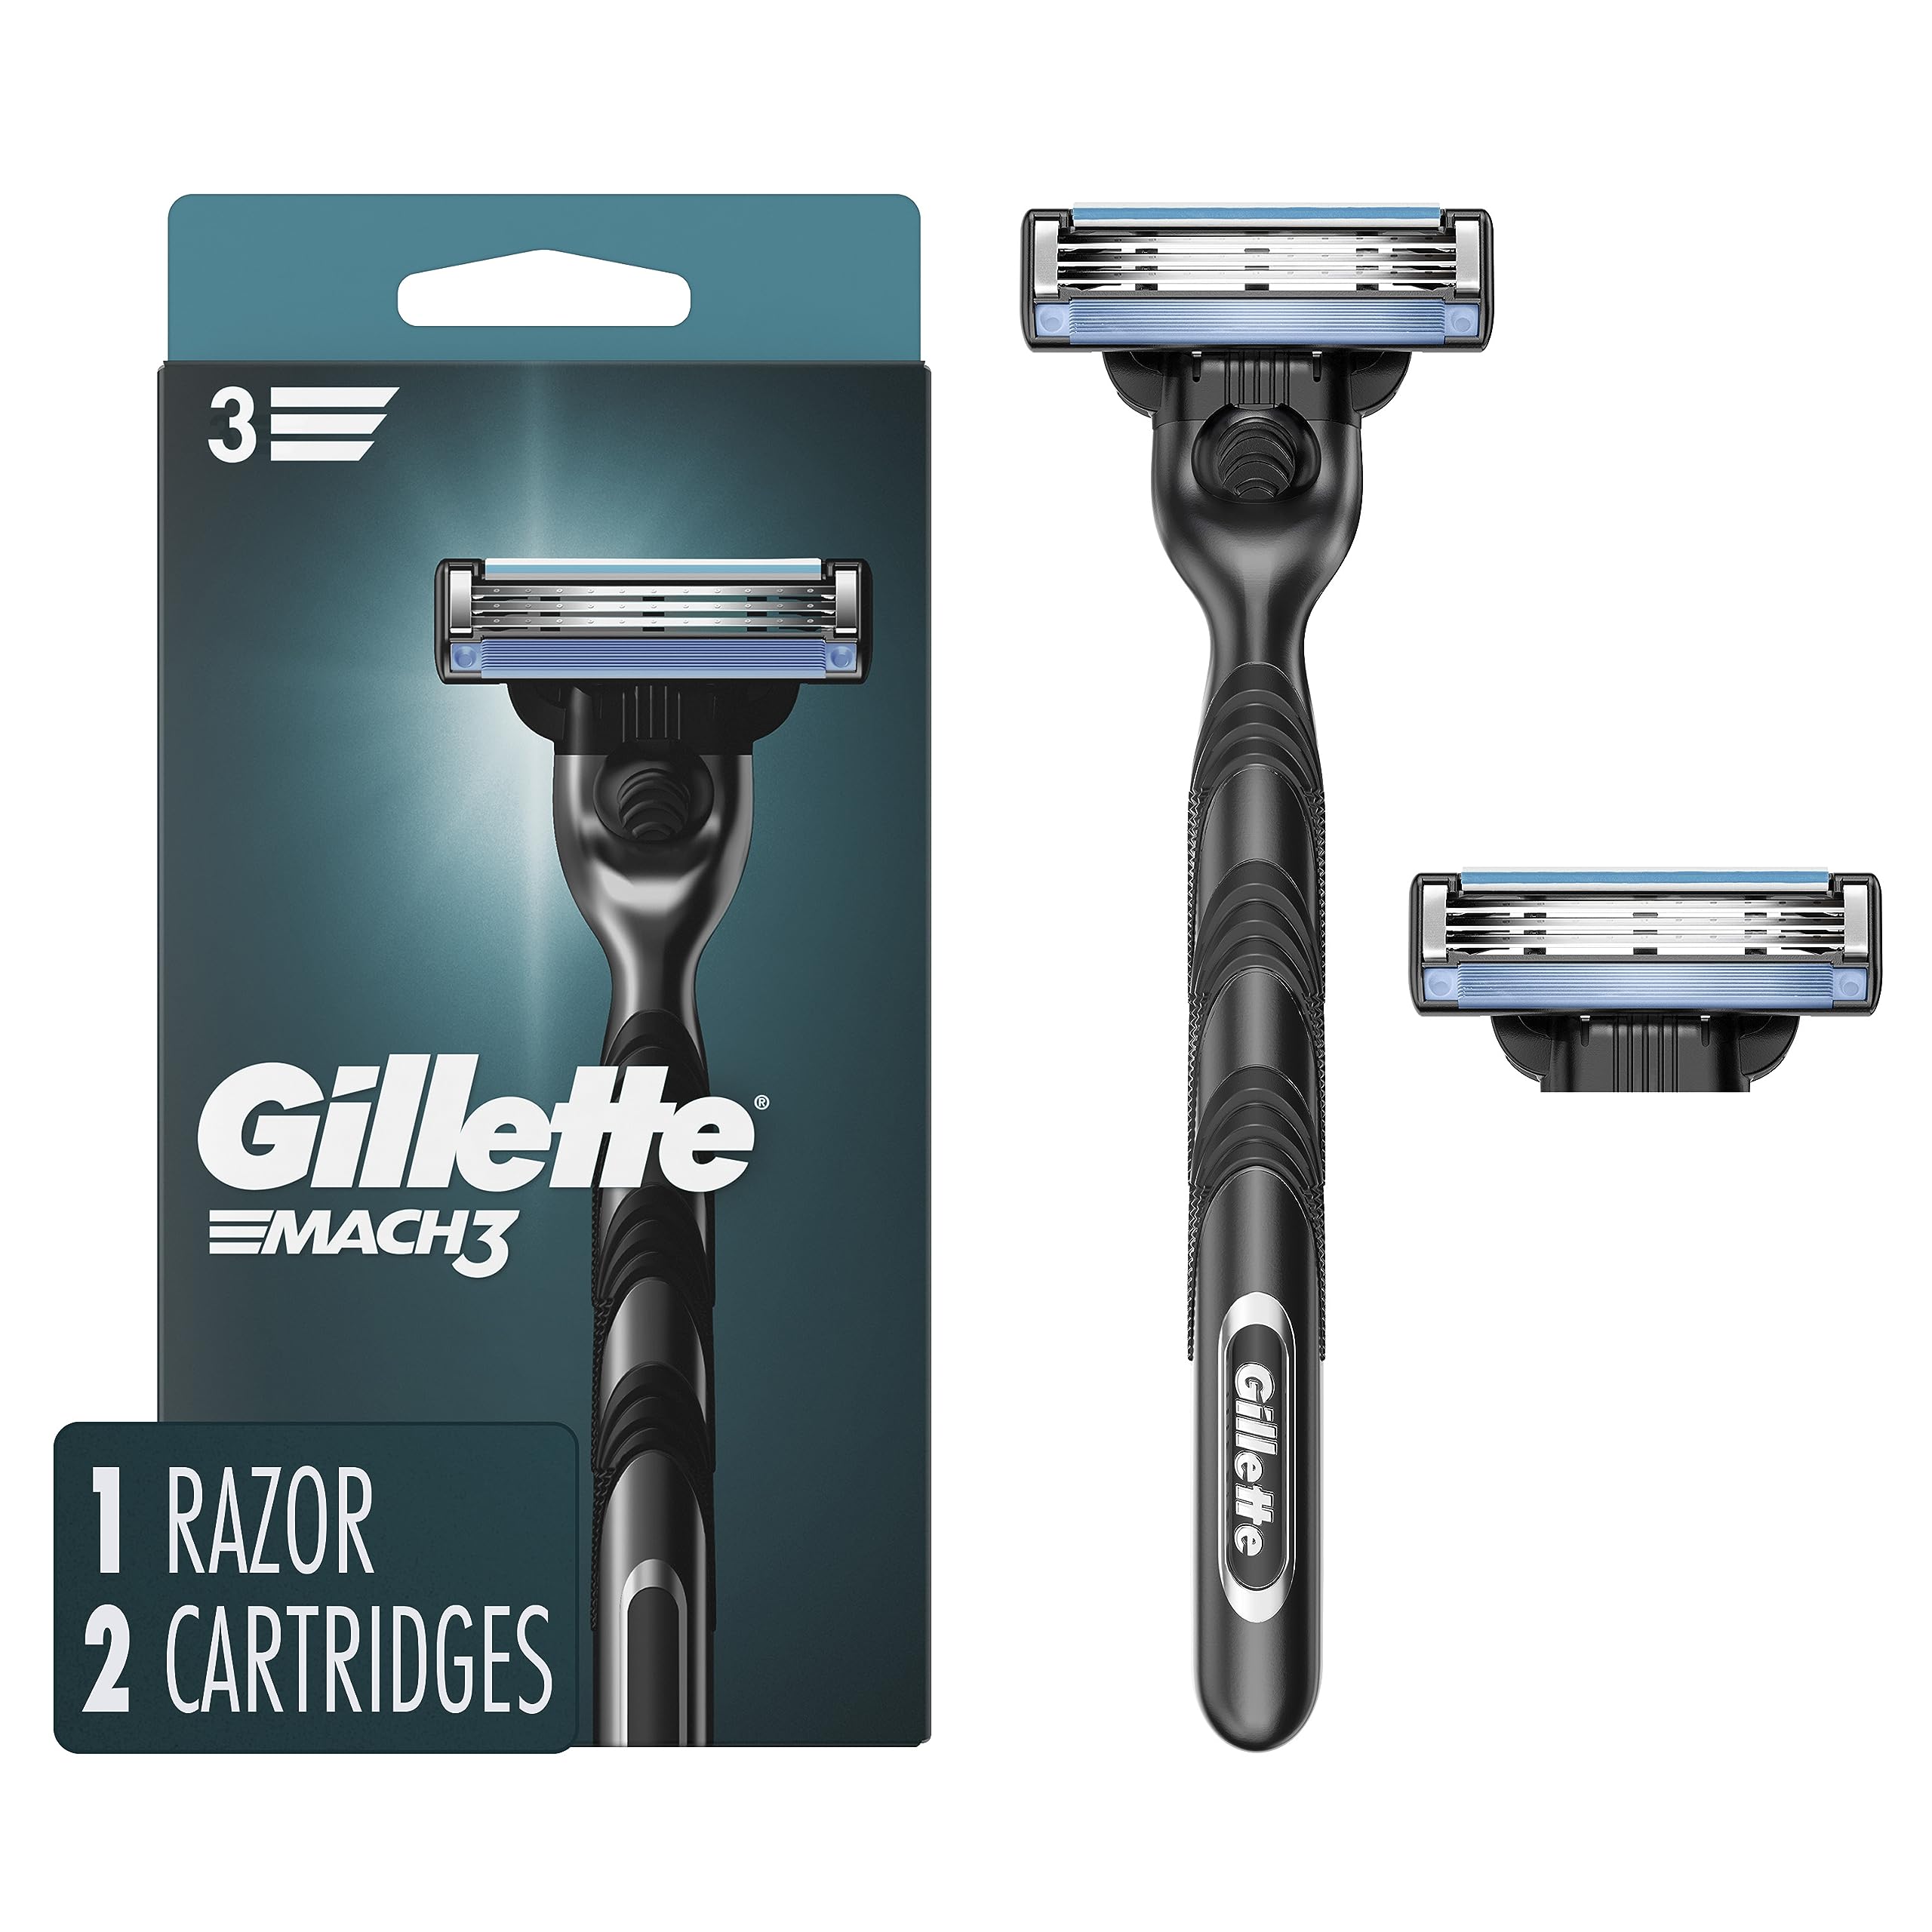 Gillette Mach3 Mens Razor w/ 1 Handle & 2 Razor Blade Refills $6.50 w/ S&S + Free Shipping w/ Prime or on $35+